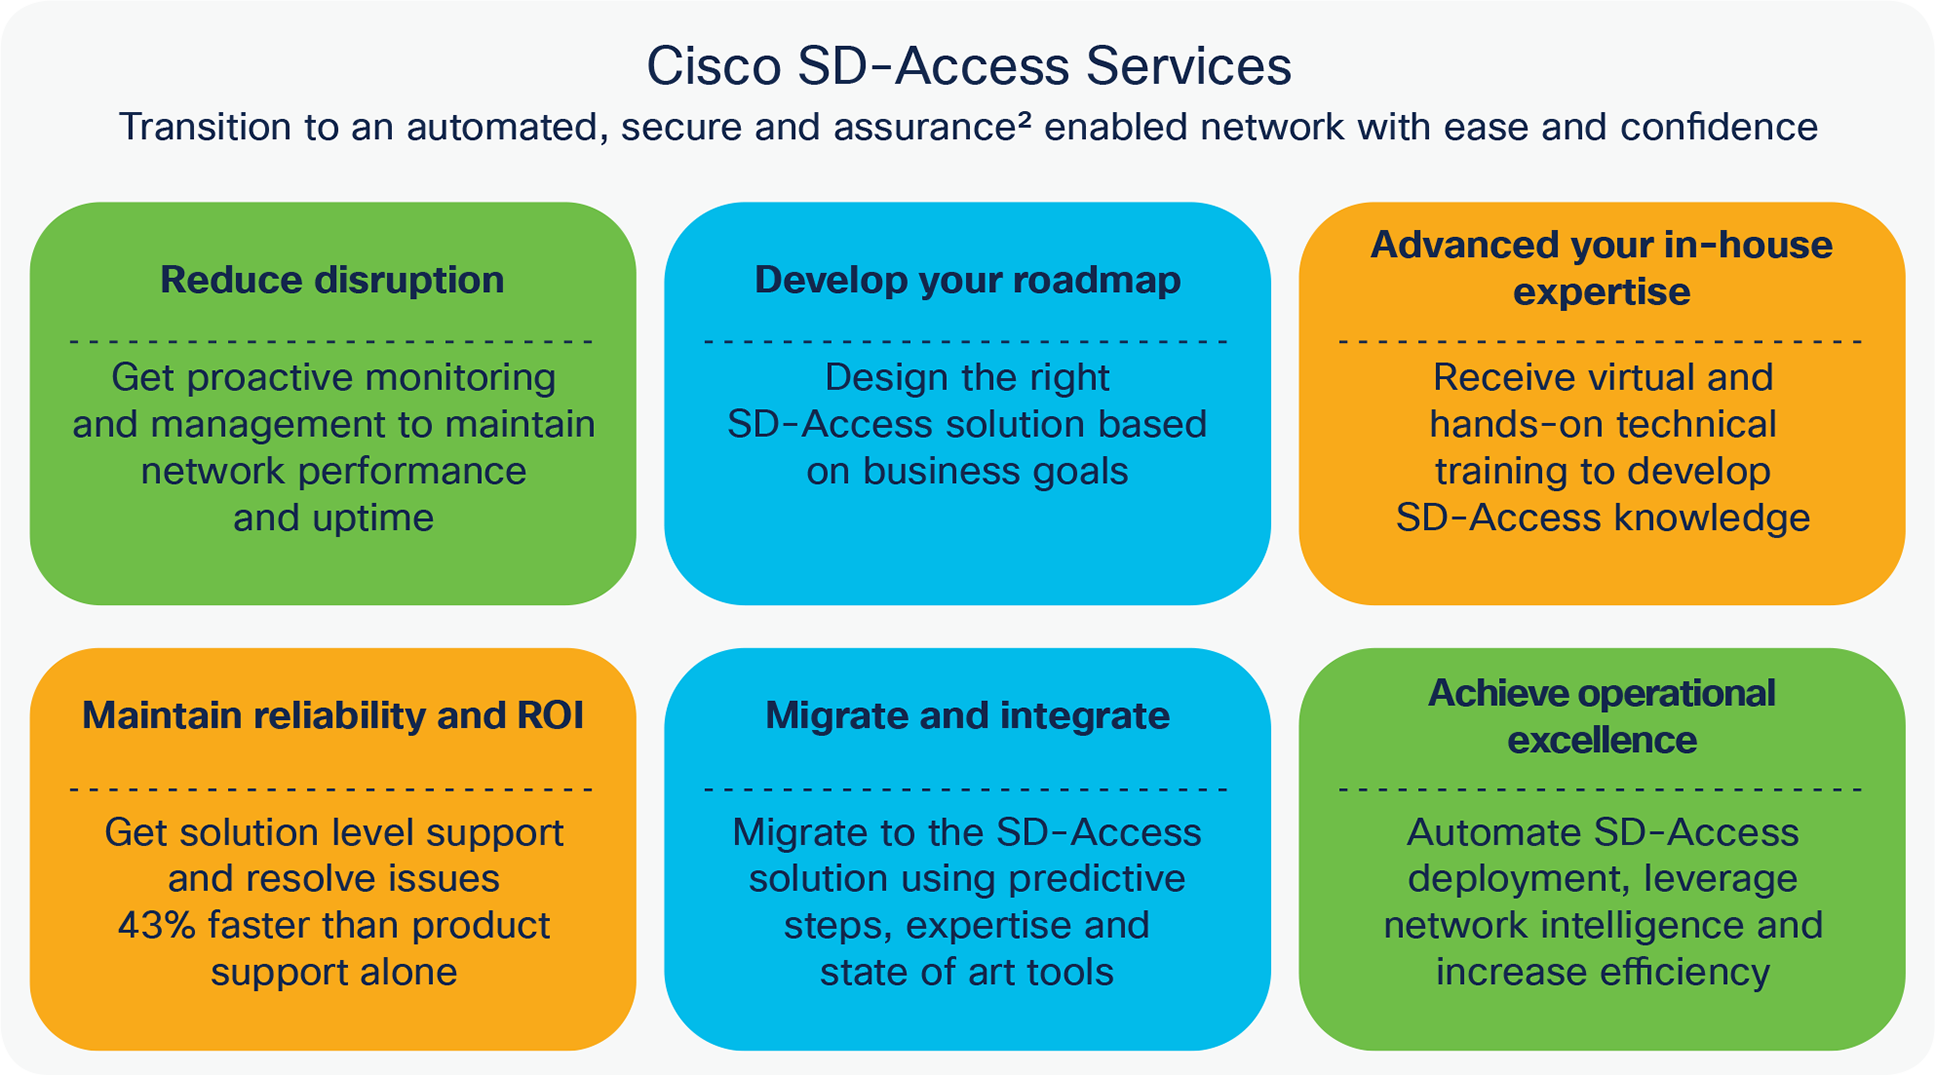 Cisco services for SD-Access solution